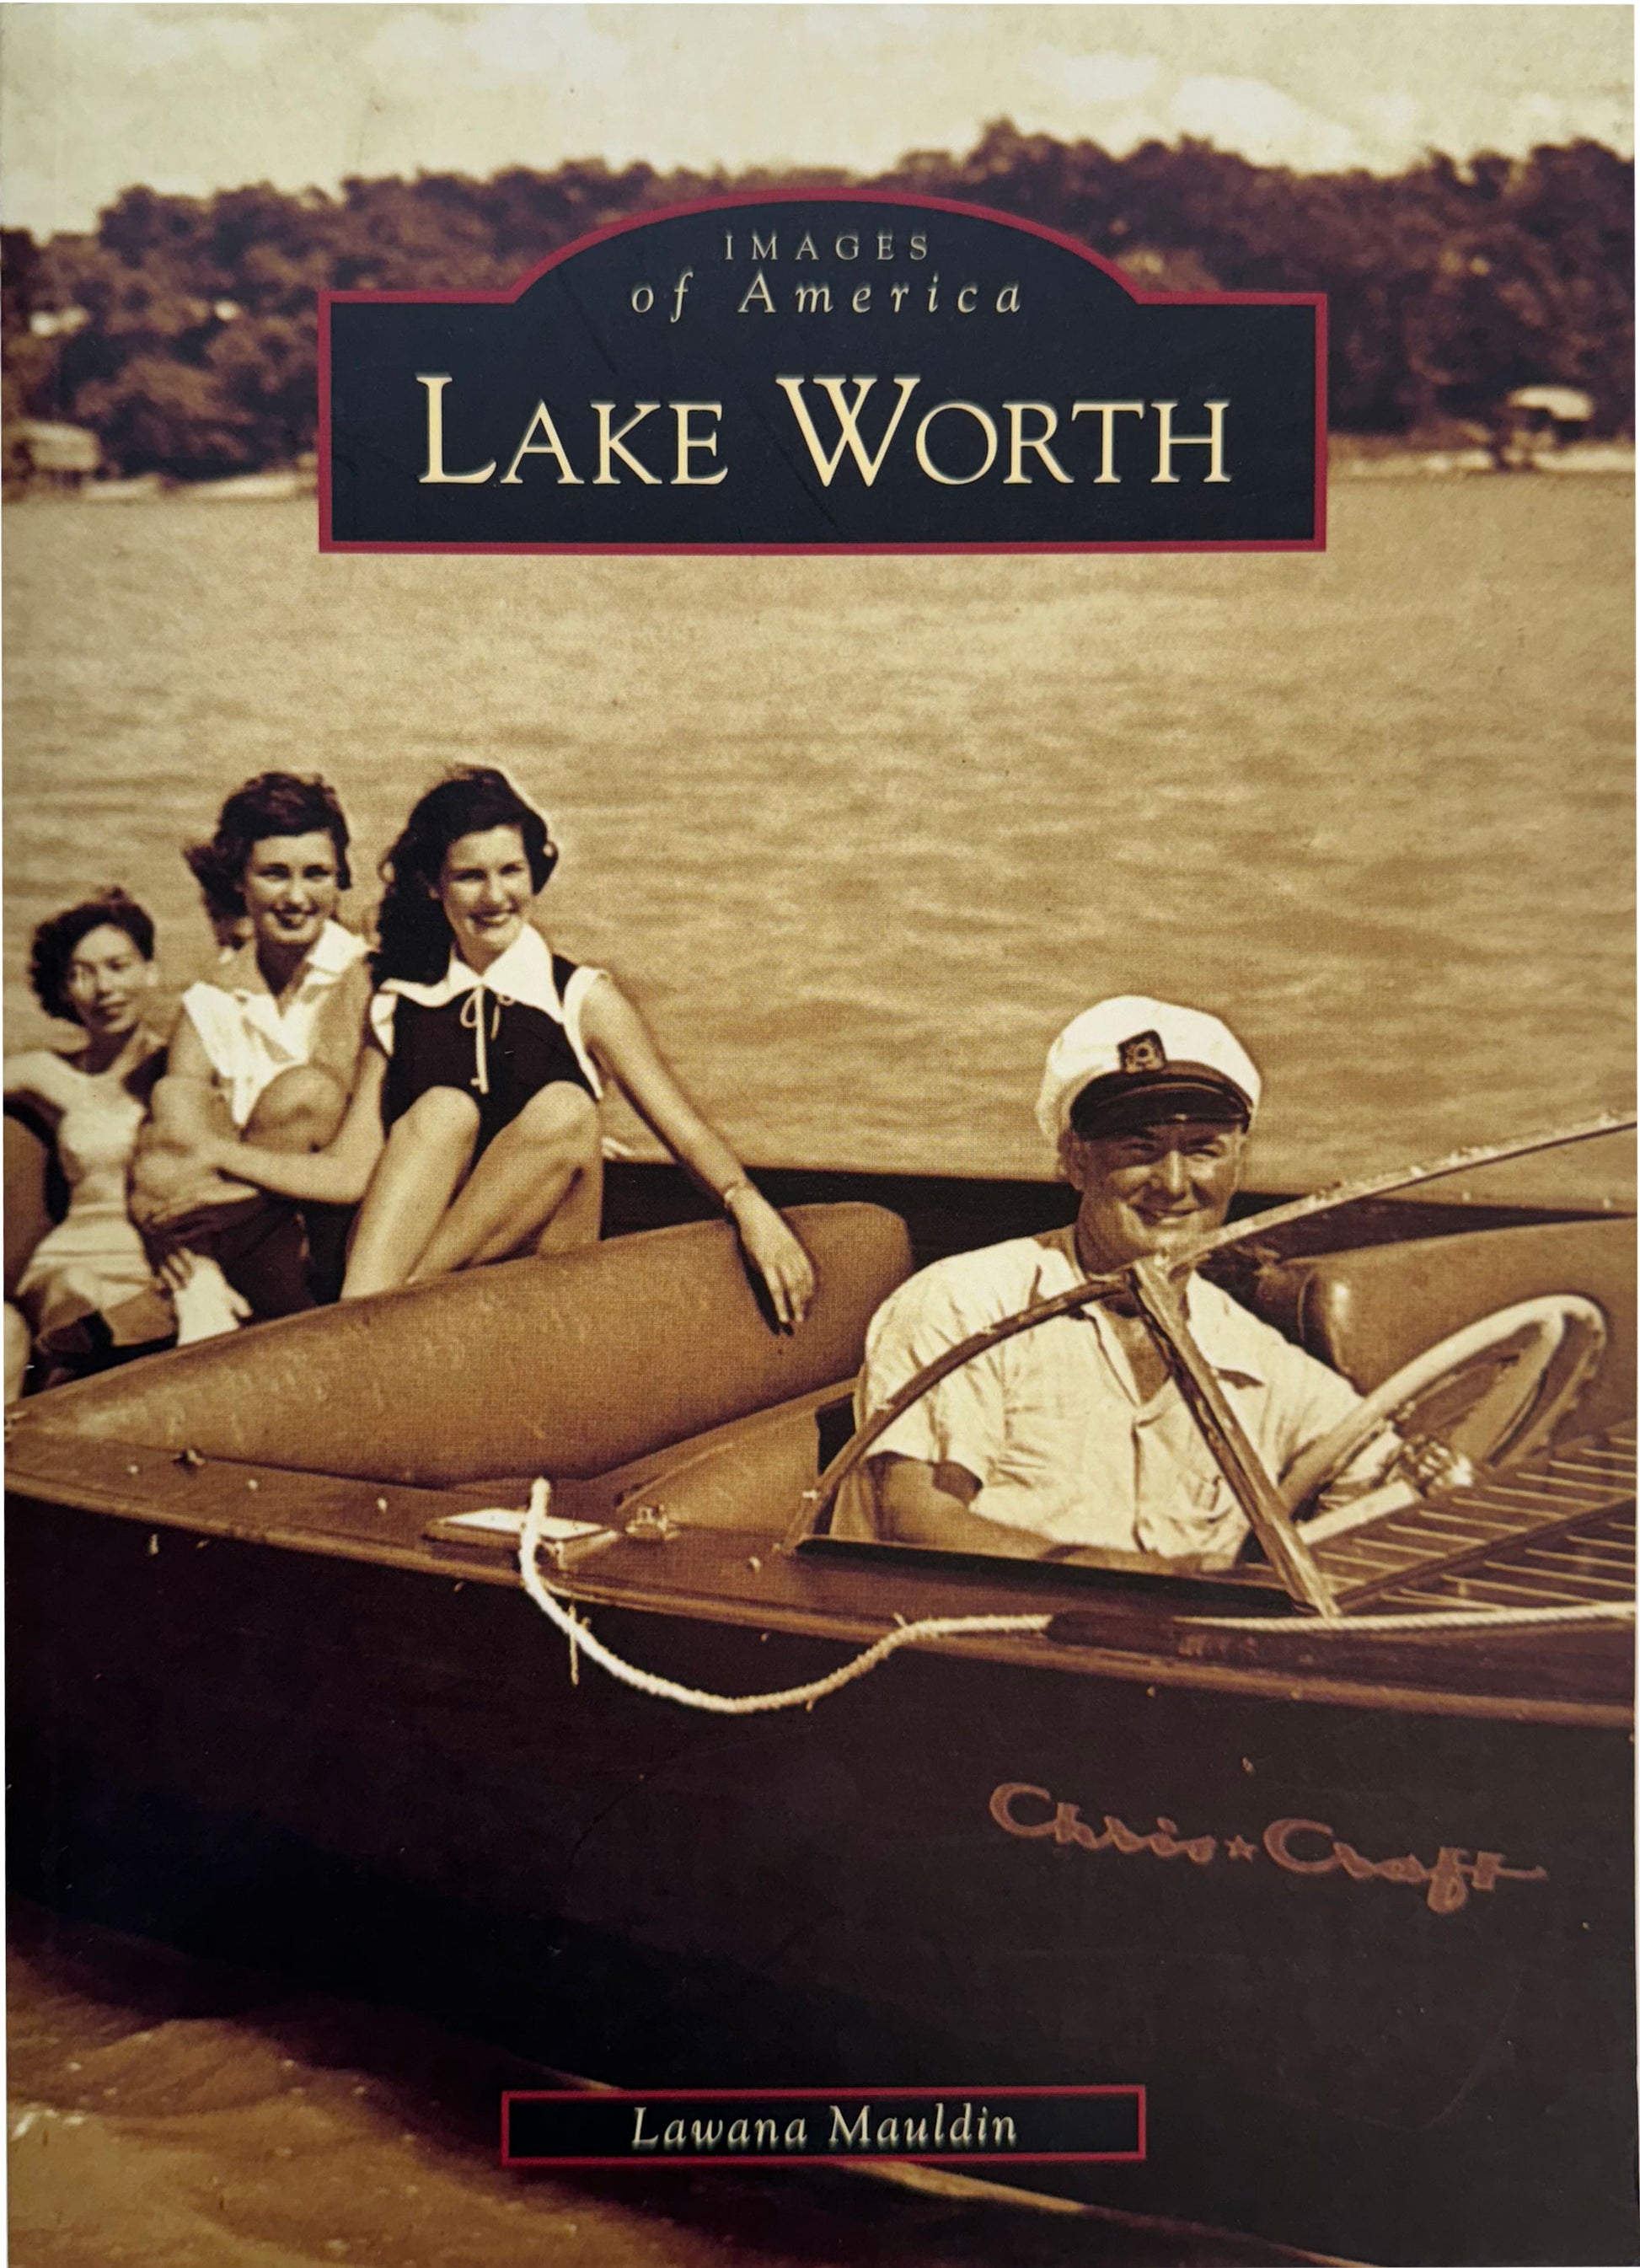 Images of America - Lake Worth, Lawana Mauldin